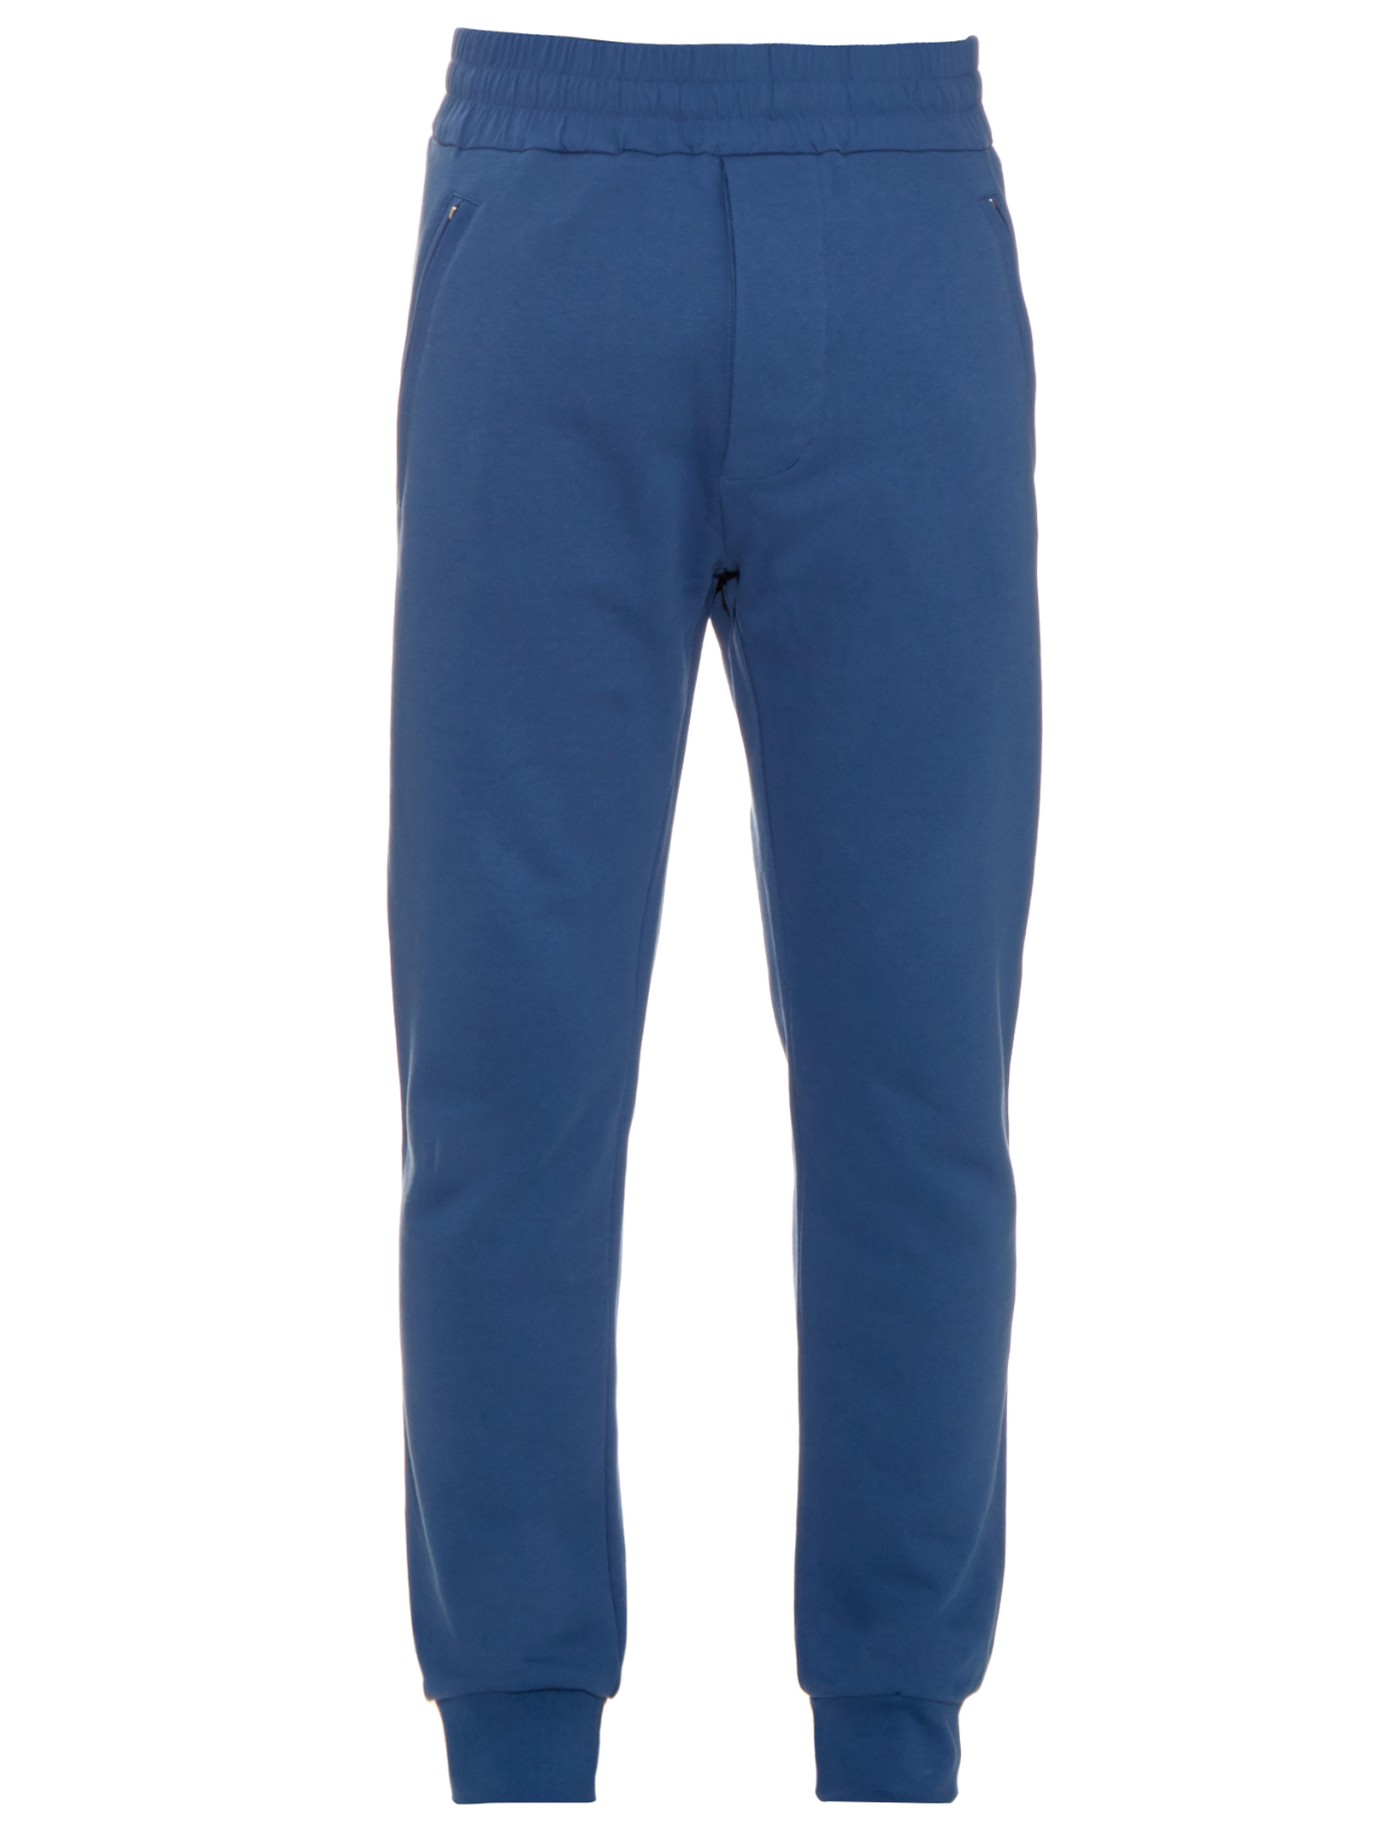 Acne Studios Johna Cotton-jersey Sweatpants in Blue for Men - Lyst